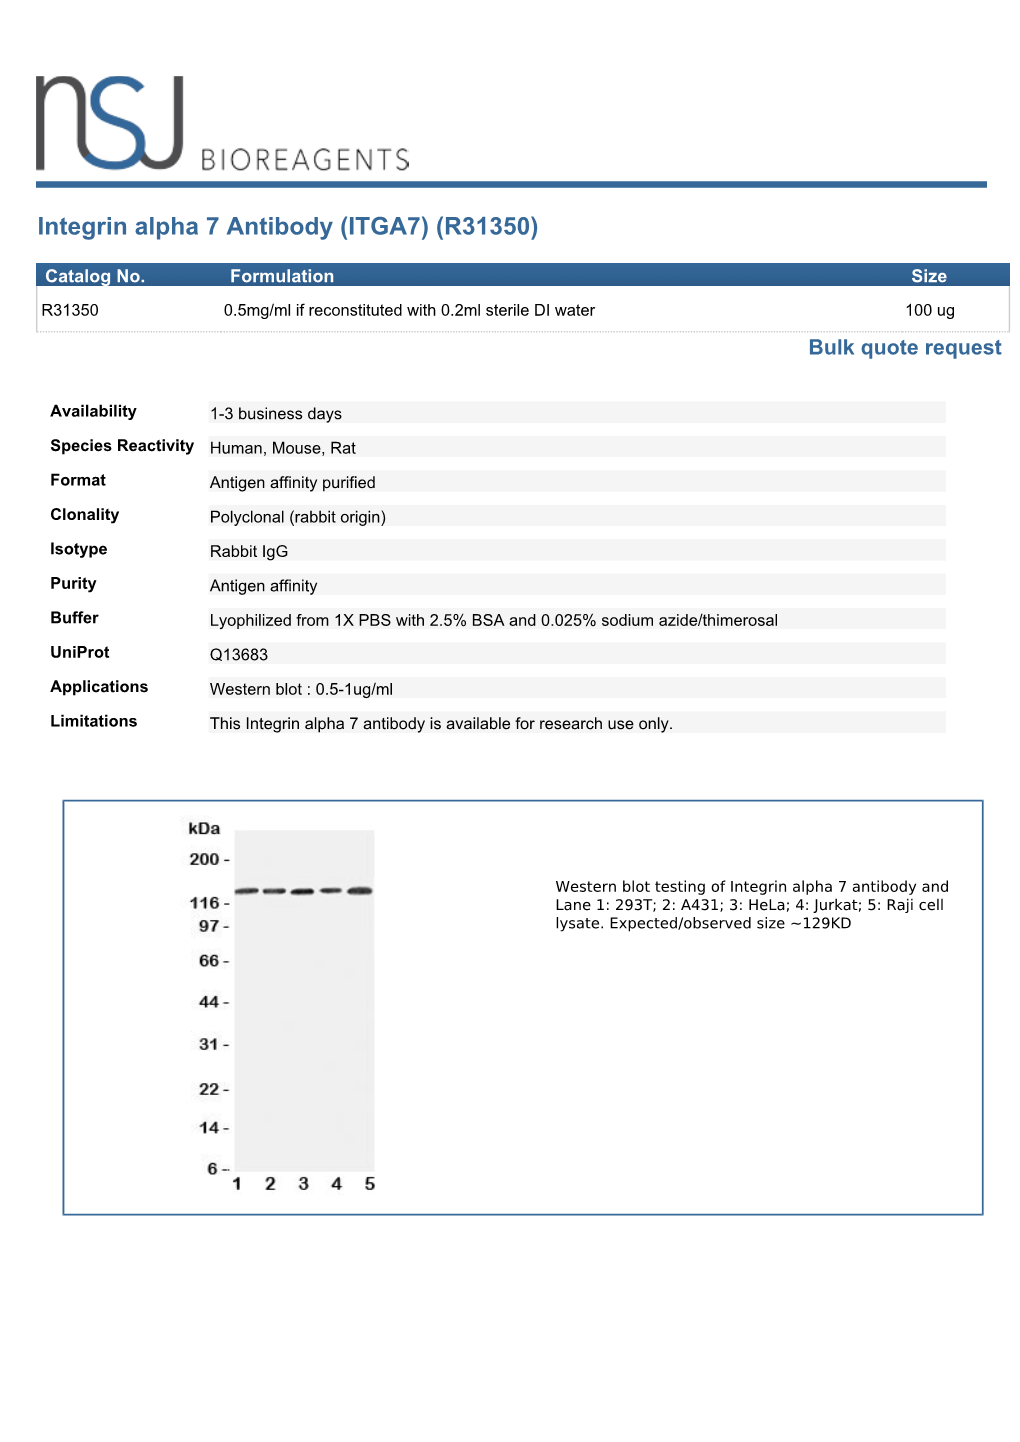 Integrin Alpha 7 Antibody (ITGA7) (R31350)